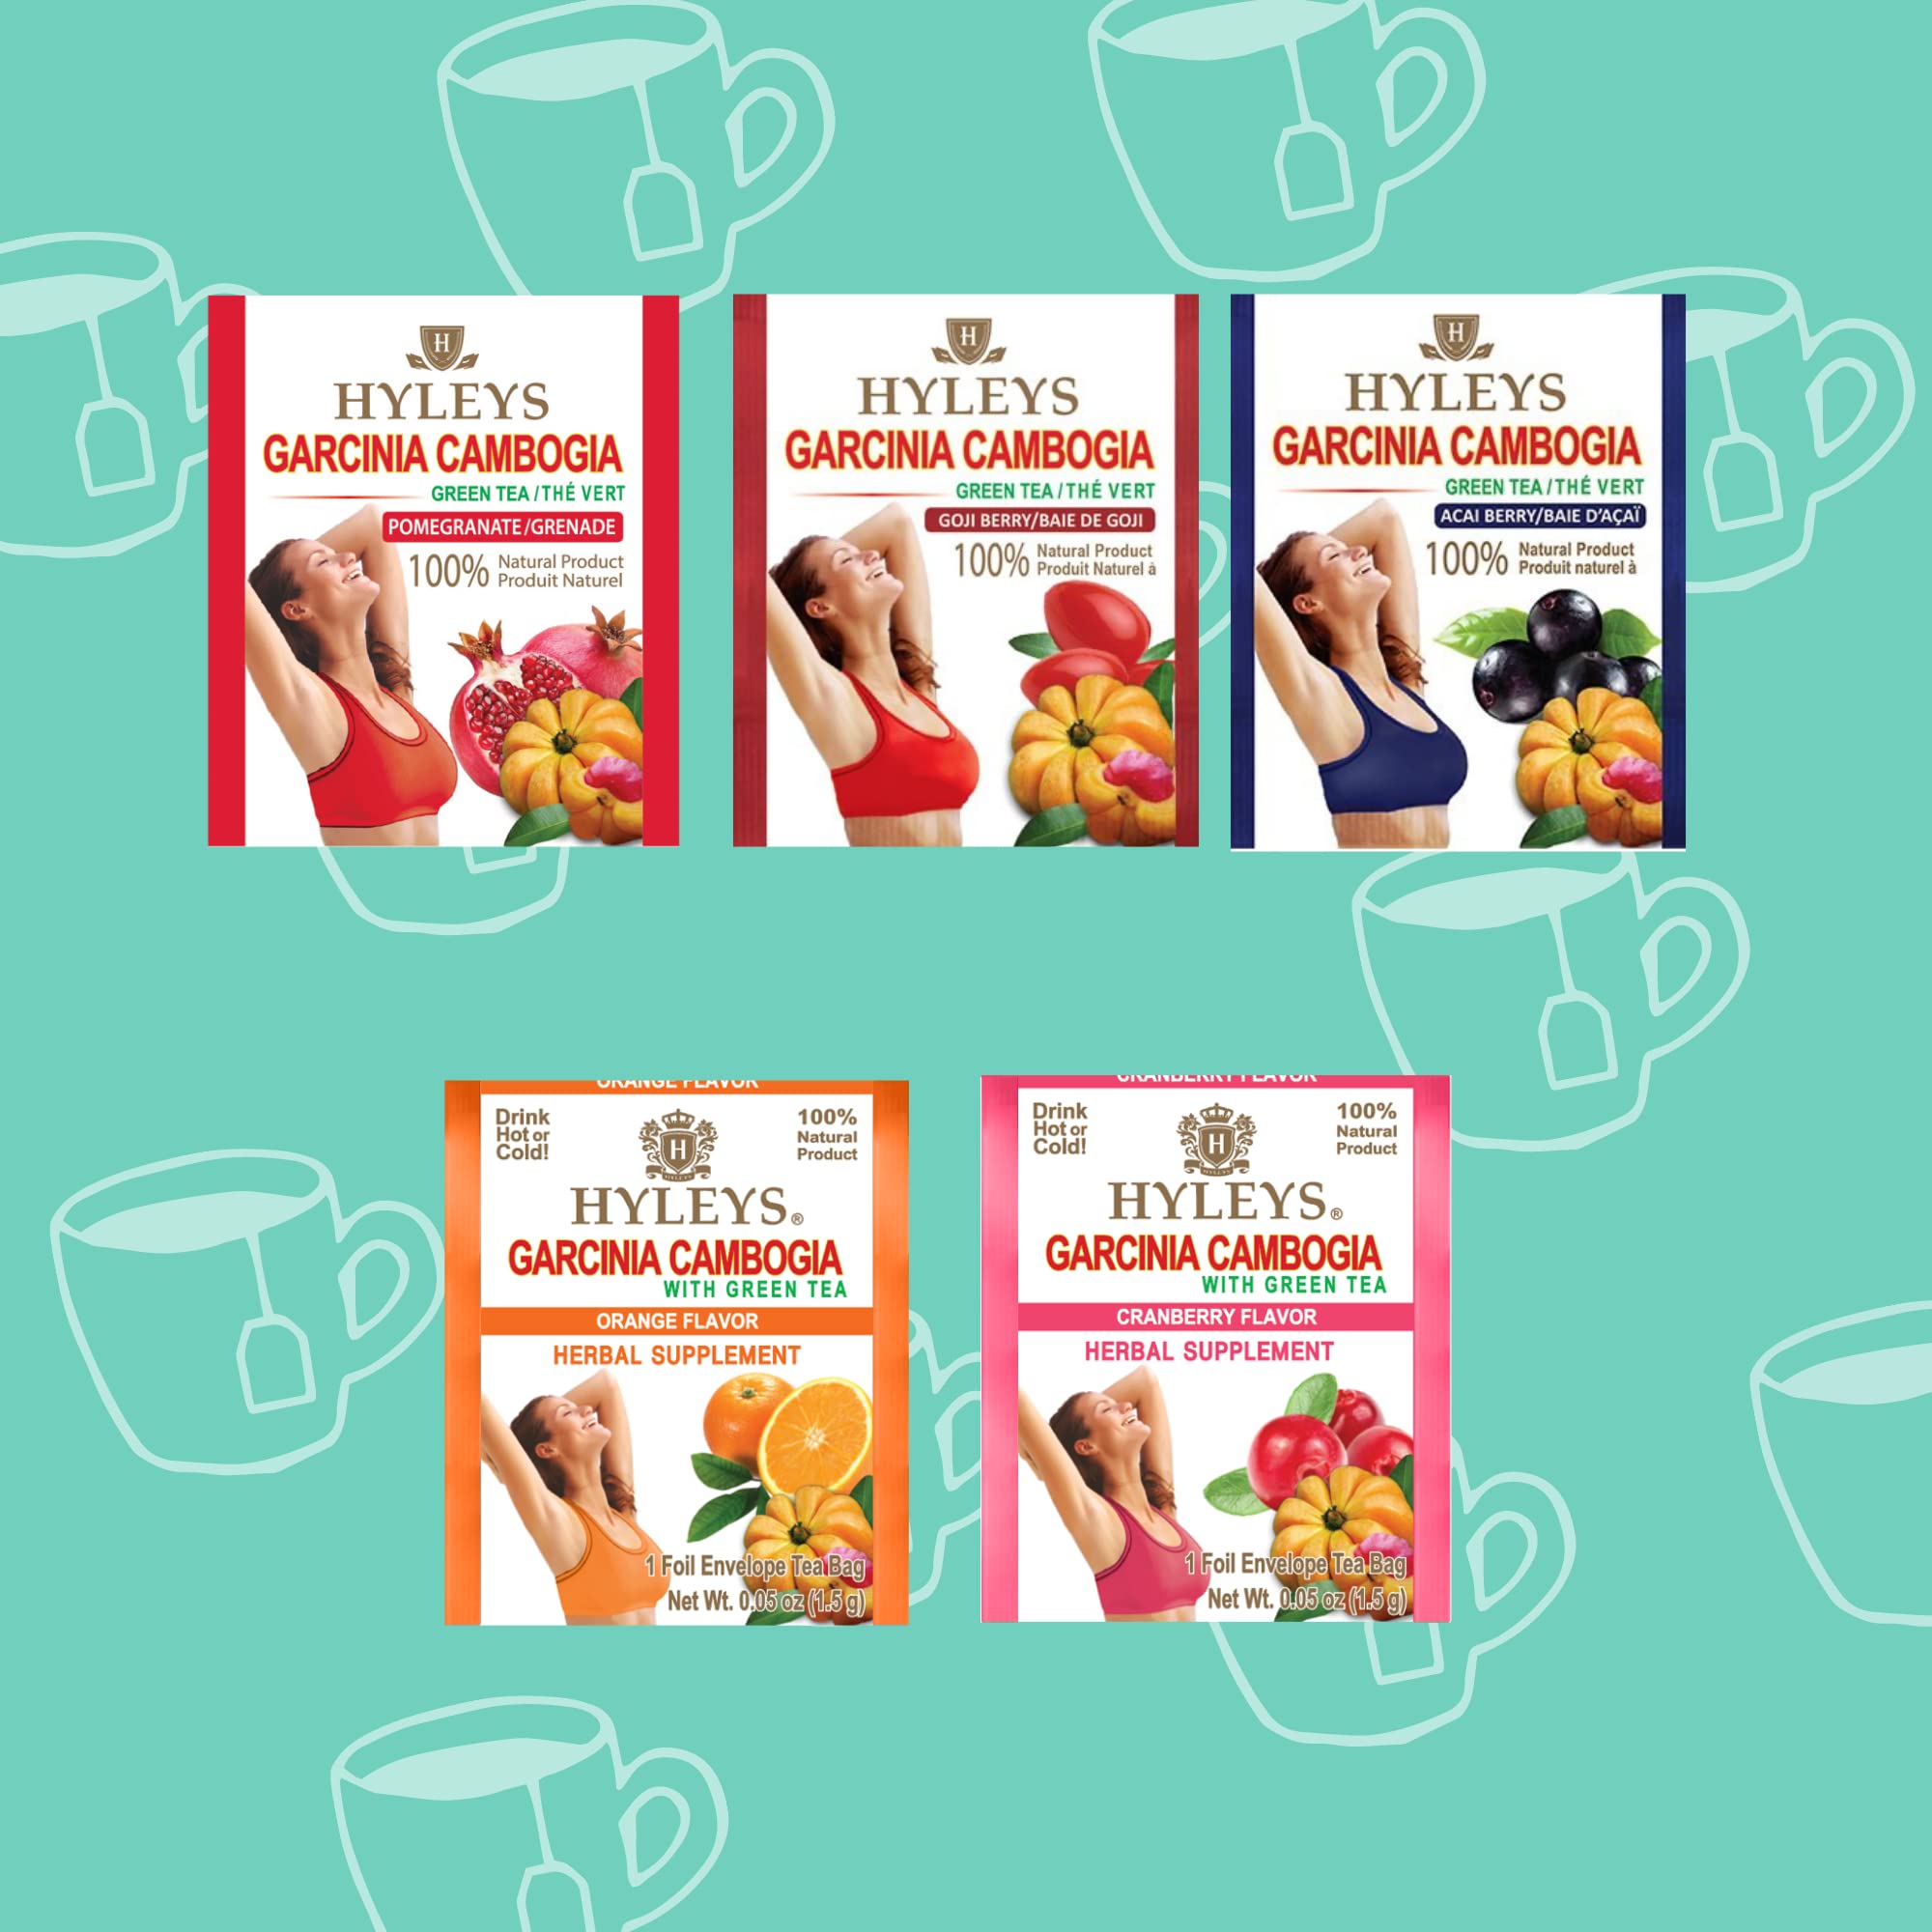 HYLEYS Tea Hyleys Wellness Garcinia Cambogia Green Tea 5 Flavor Assortment - 25 Count (Pack of 6)